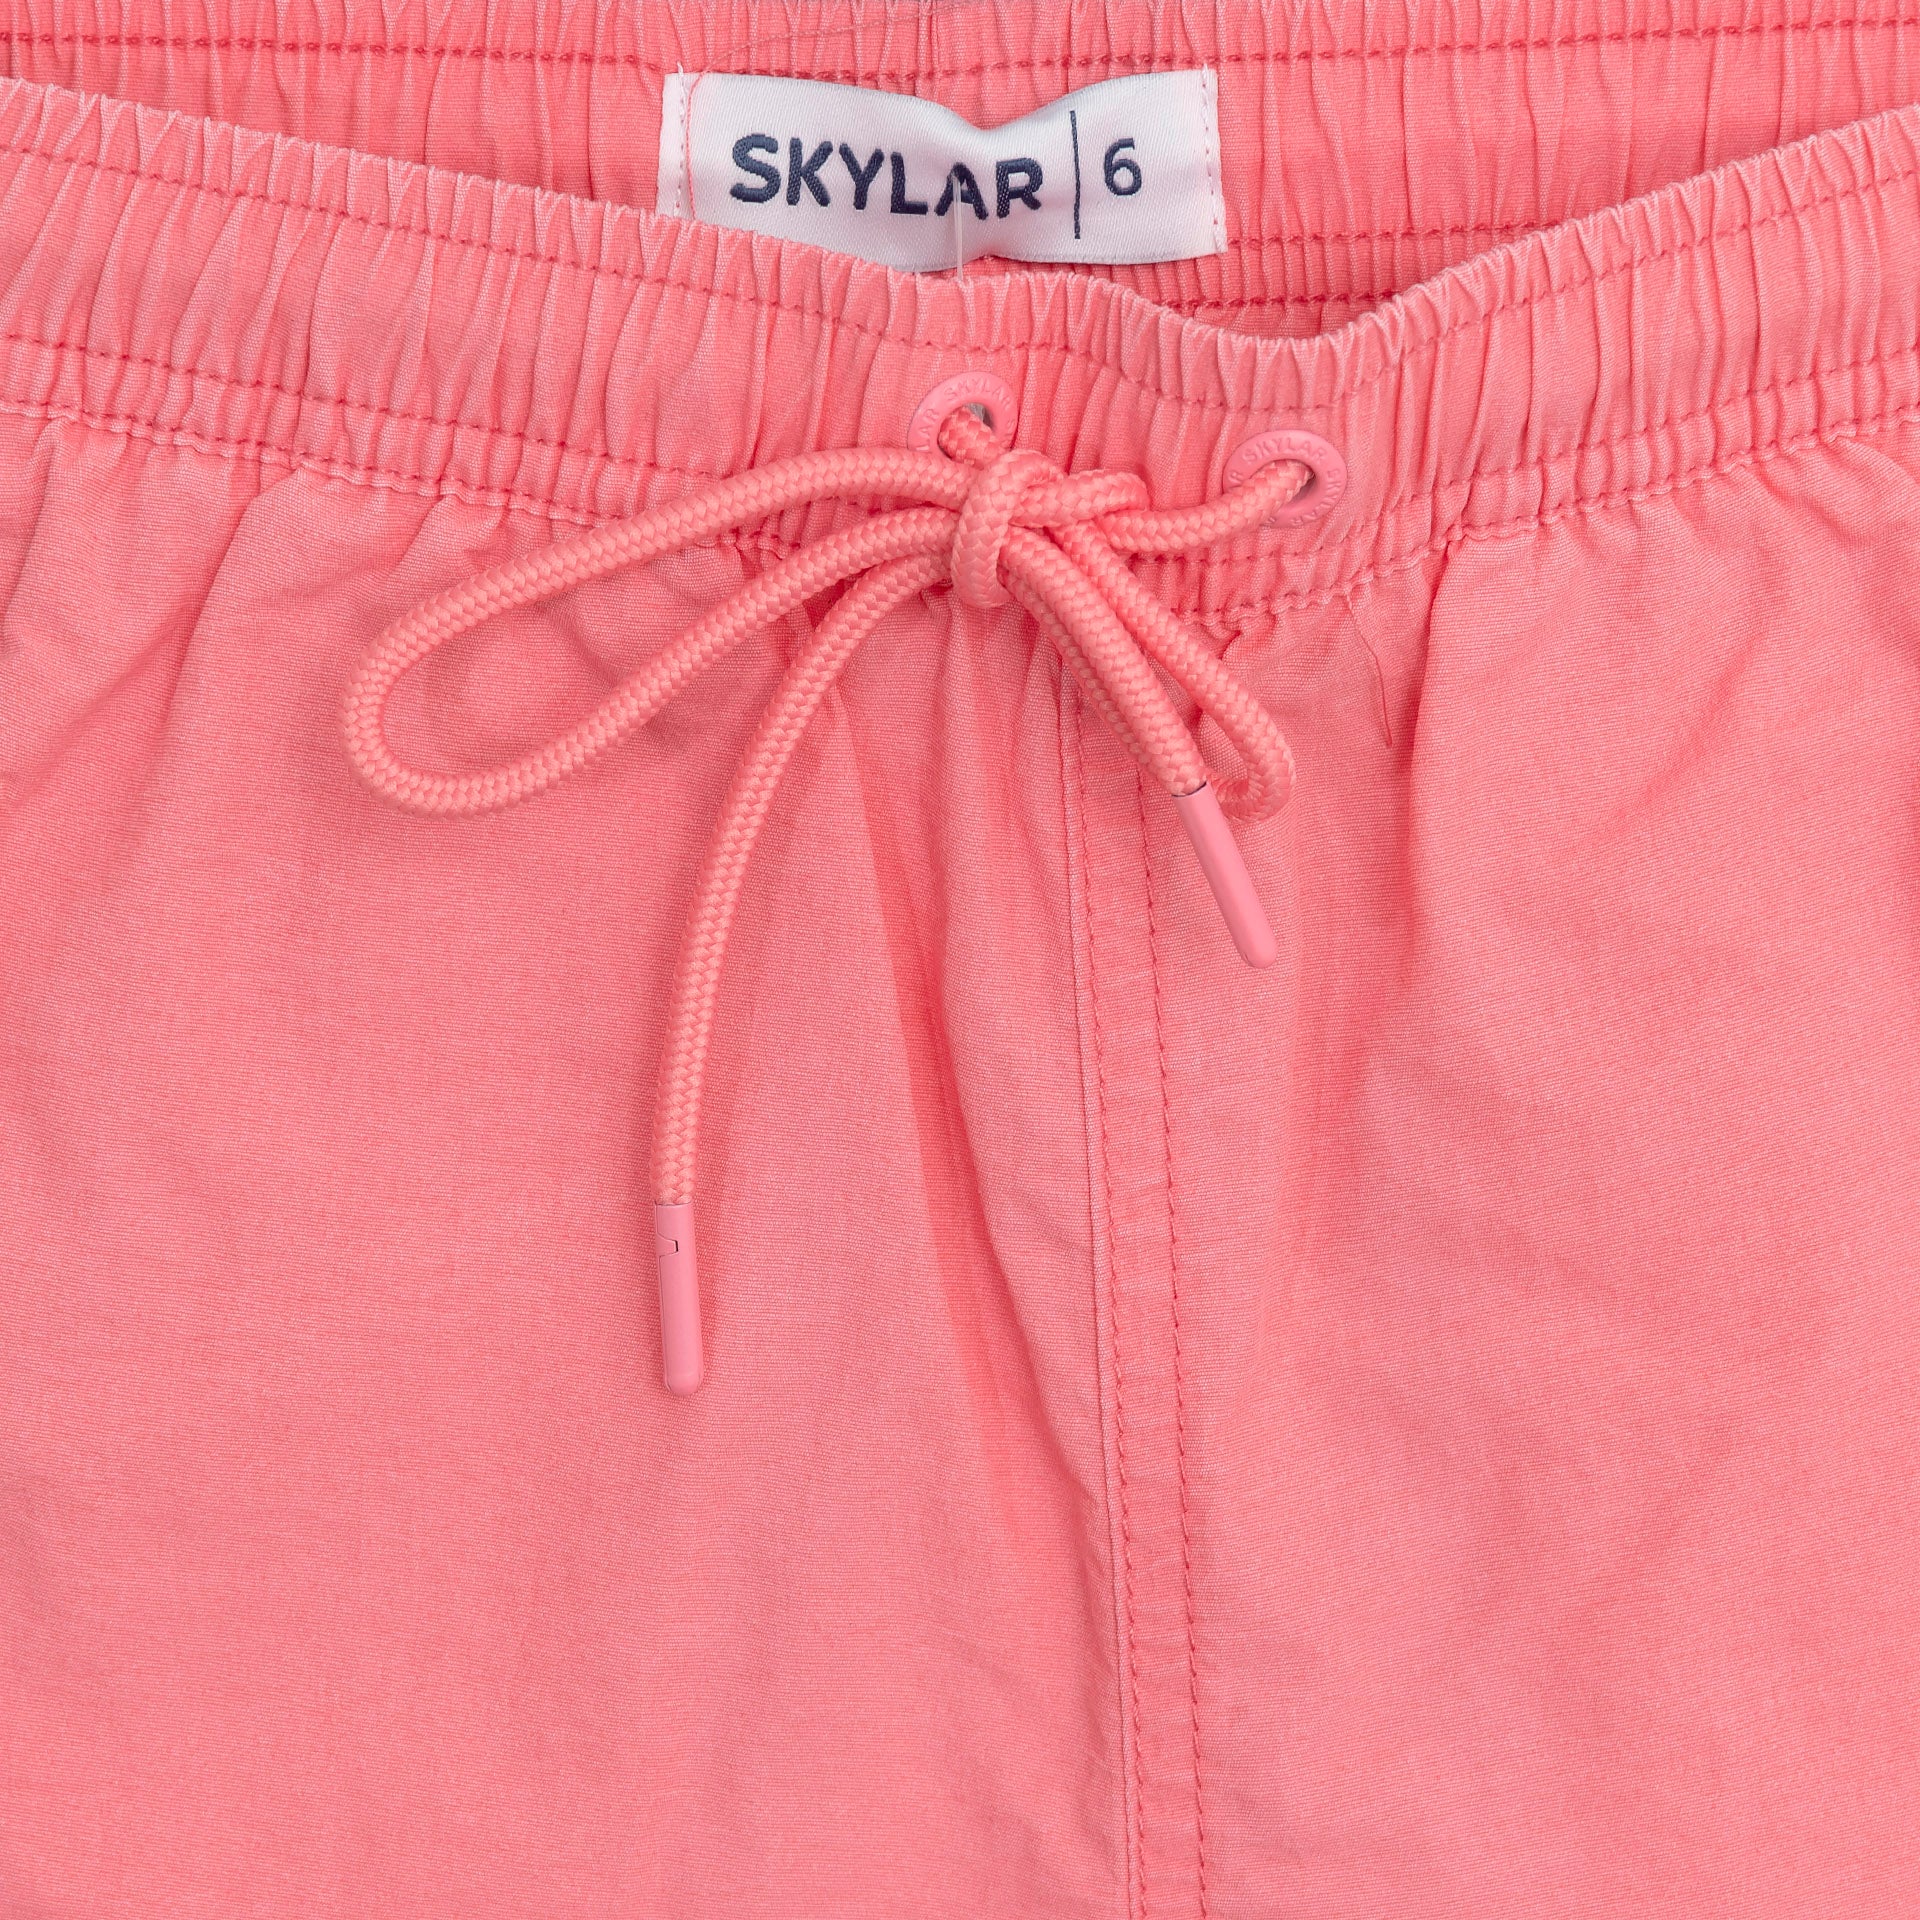 Swimming Shorts From Skylar